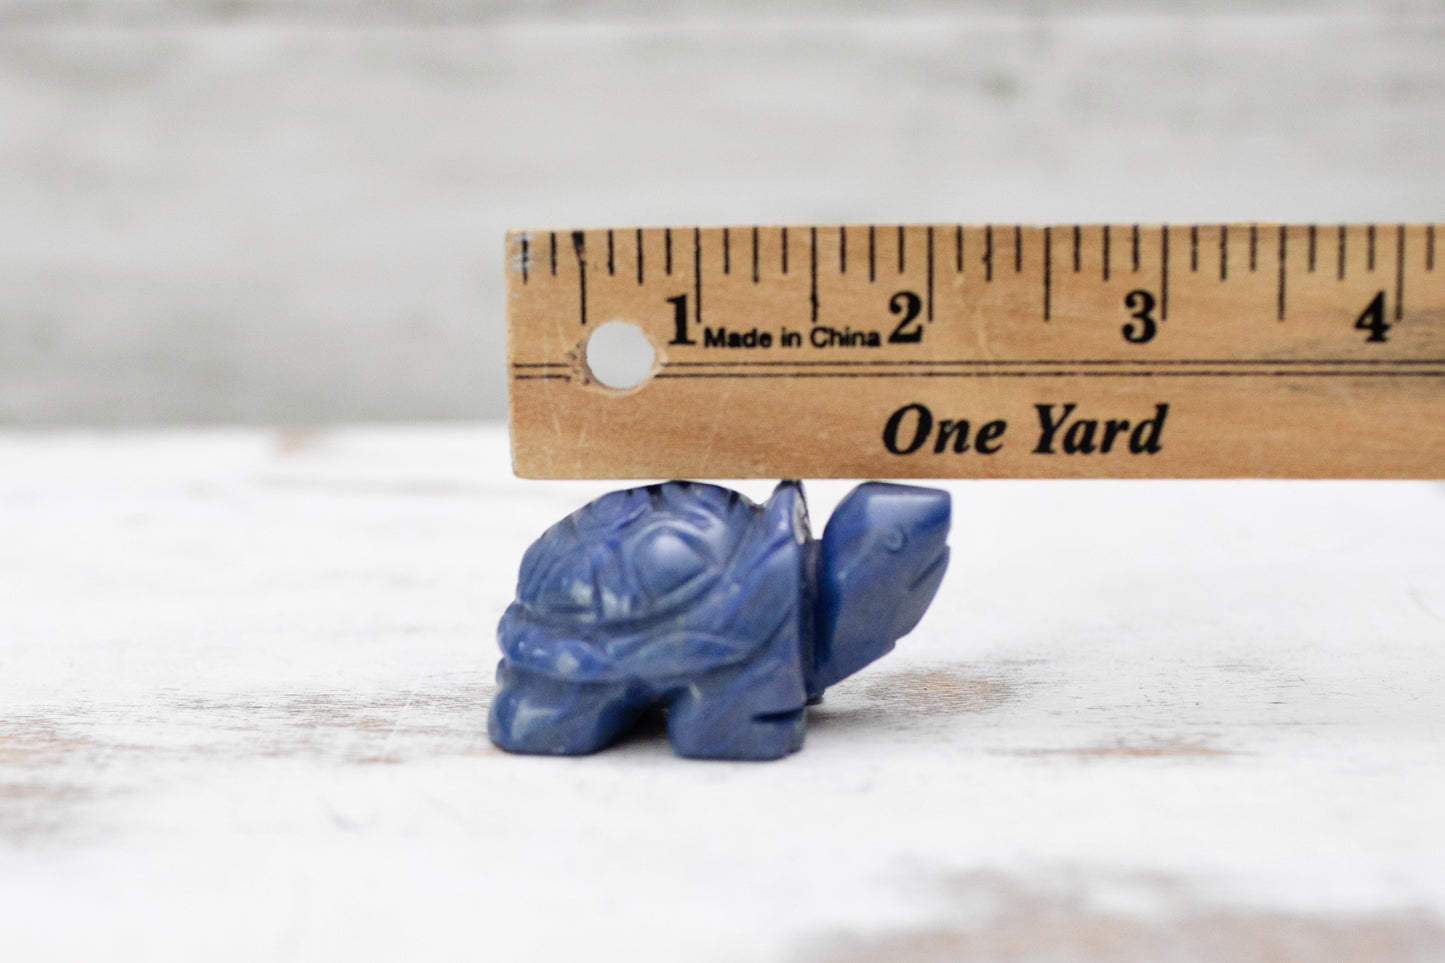 Cute Blue Aventurine Turtle Crystal Carving